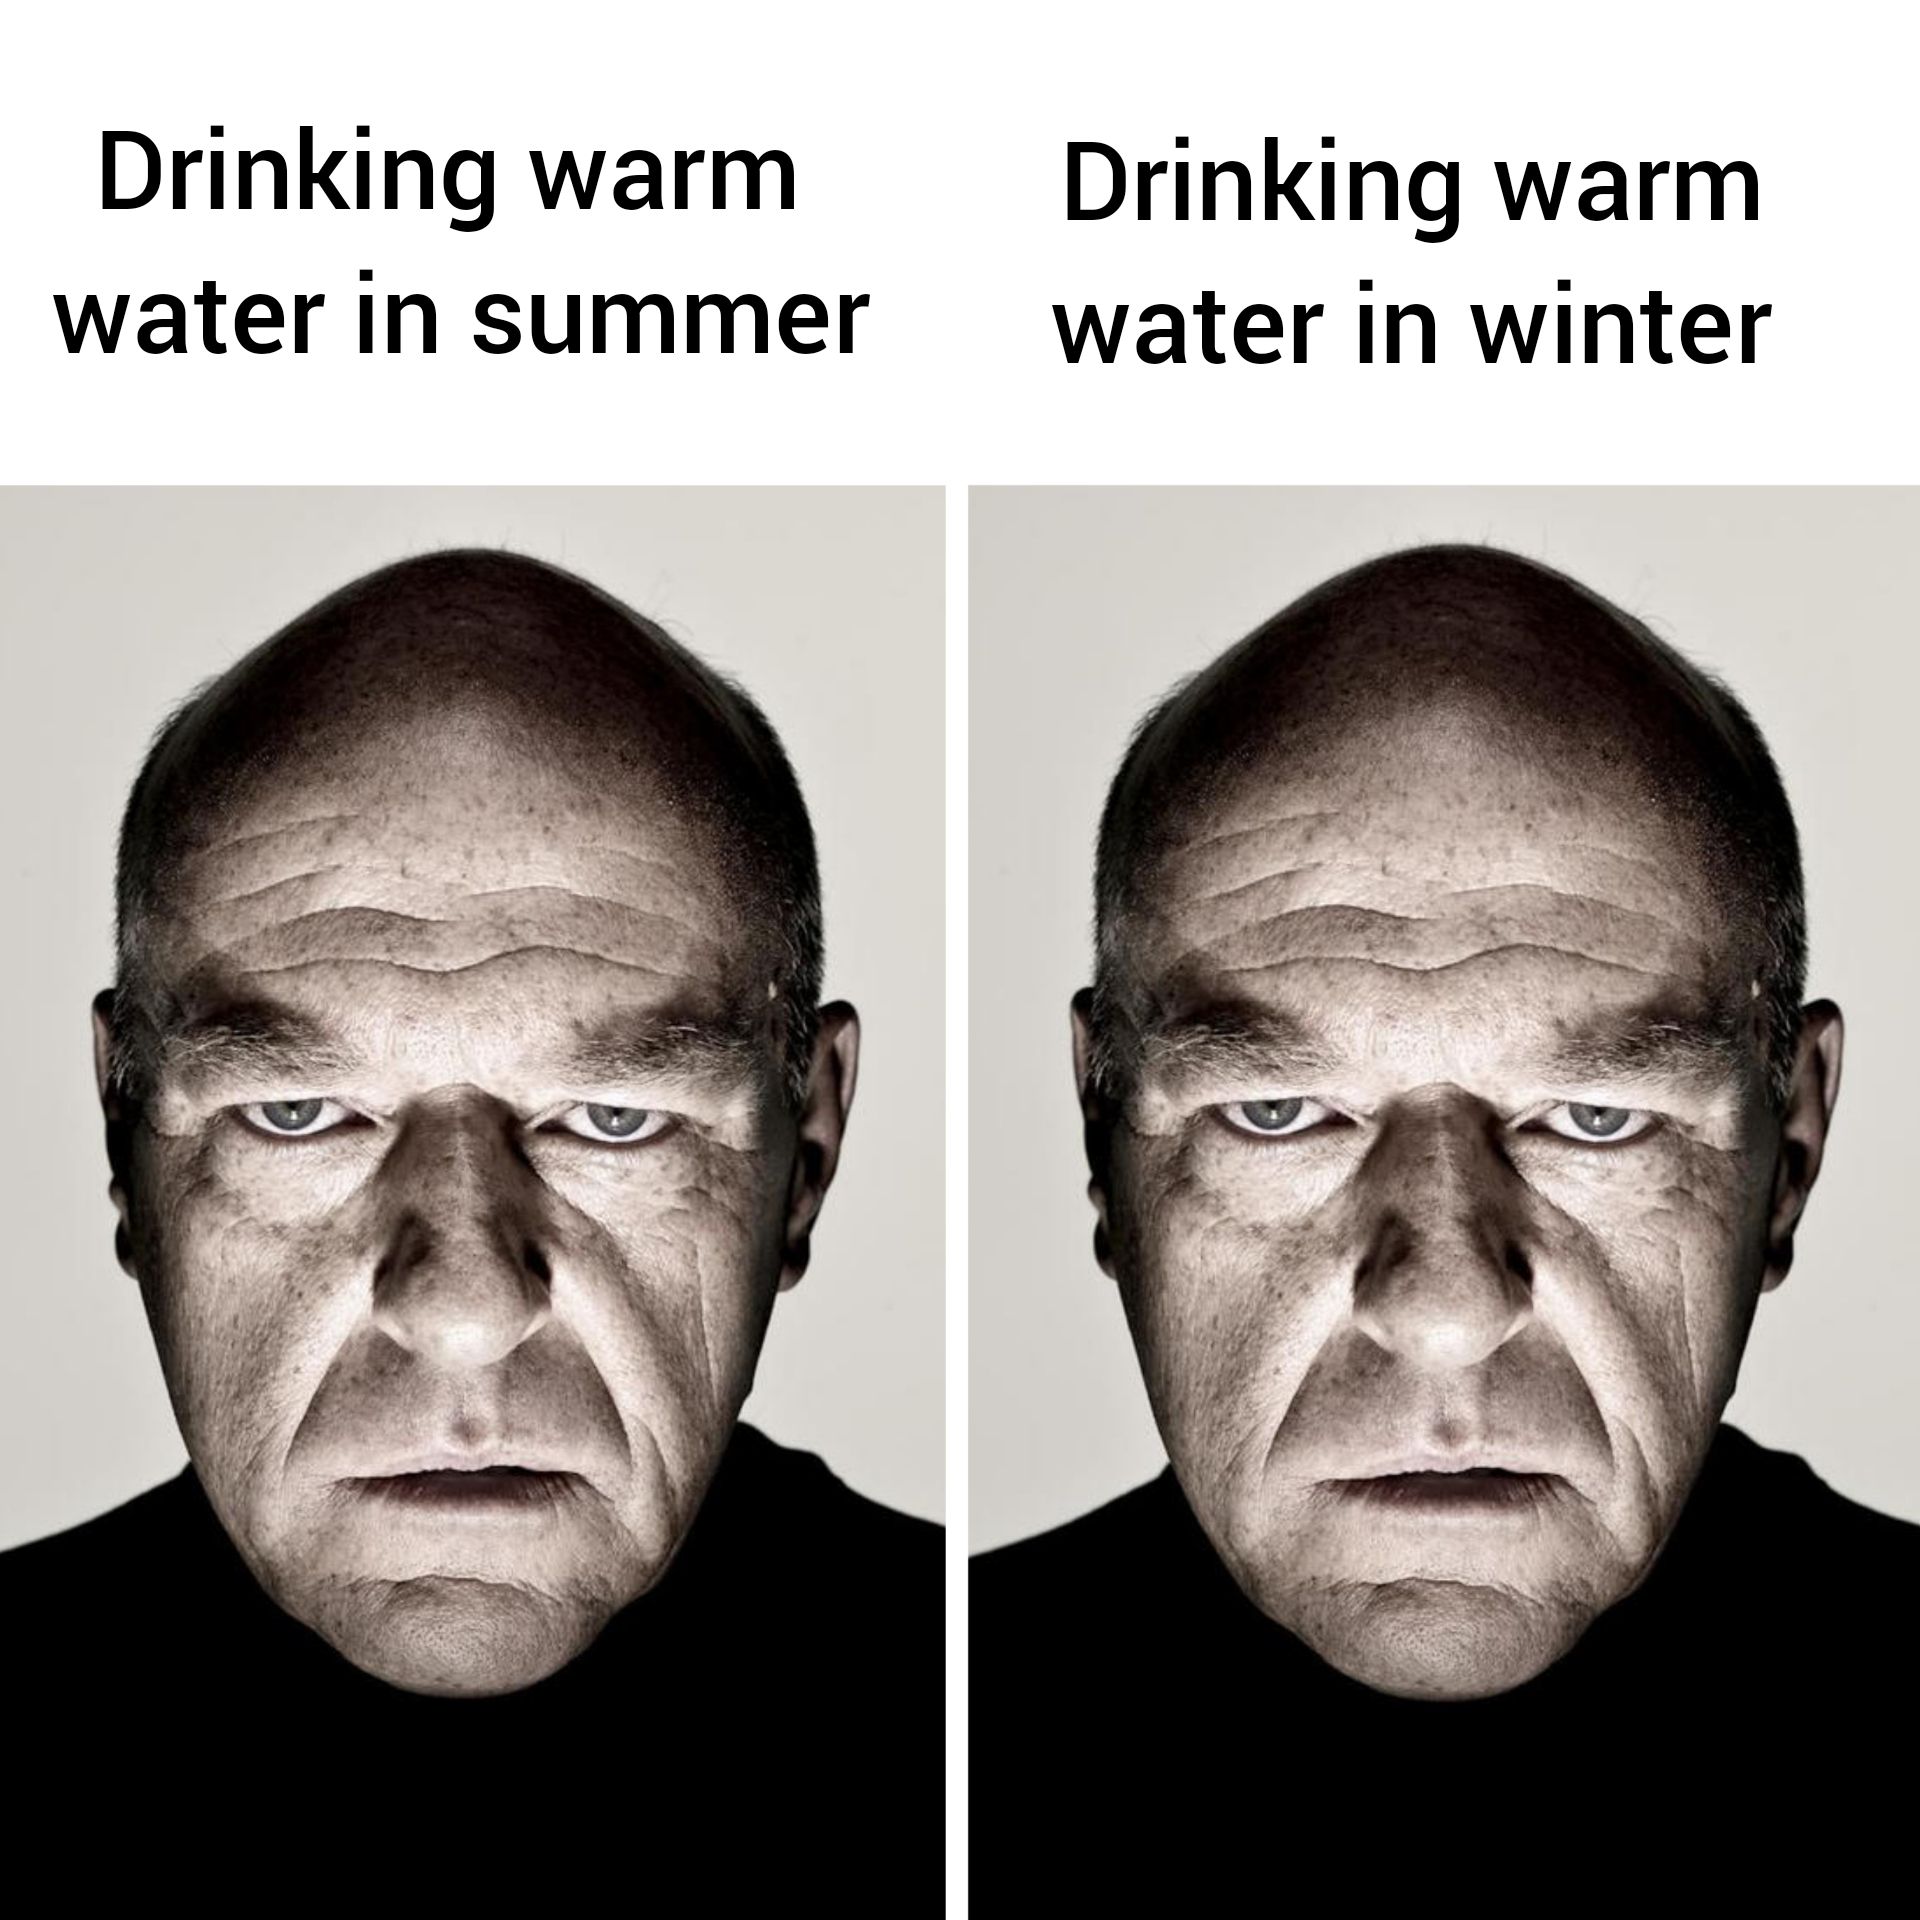 Imagine drinking warm water...